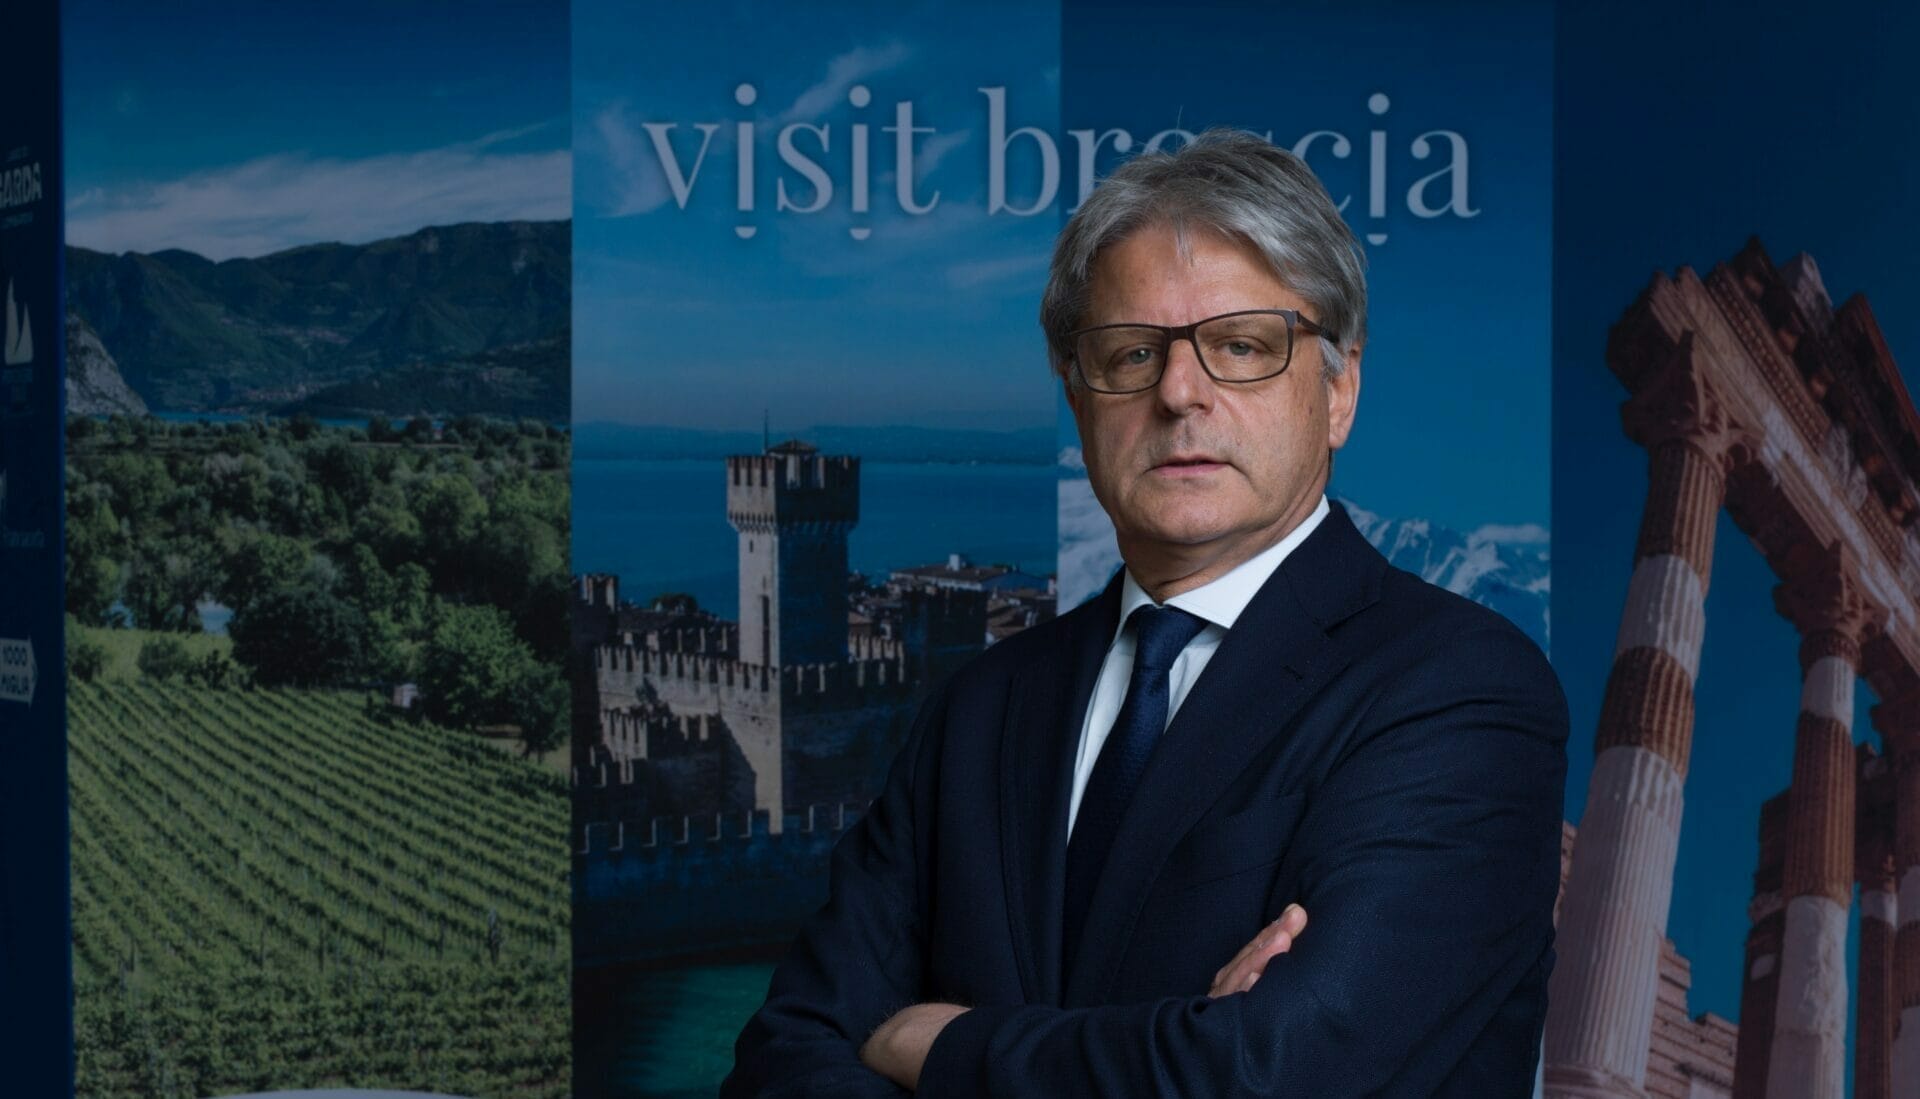 Presidente Visit Brescia Marco Polettini